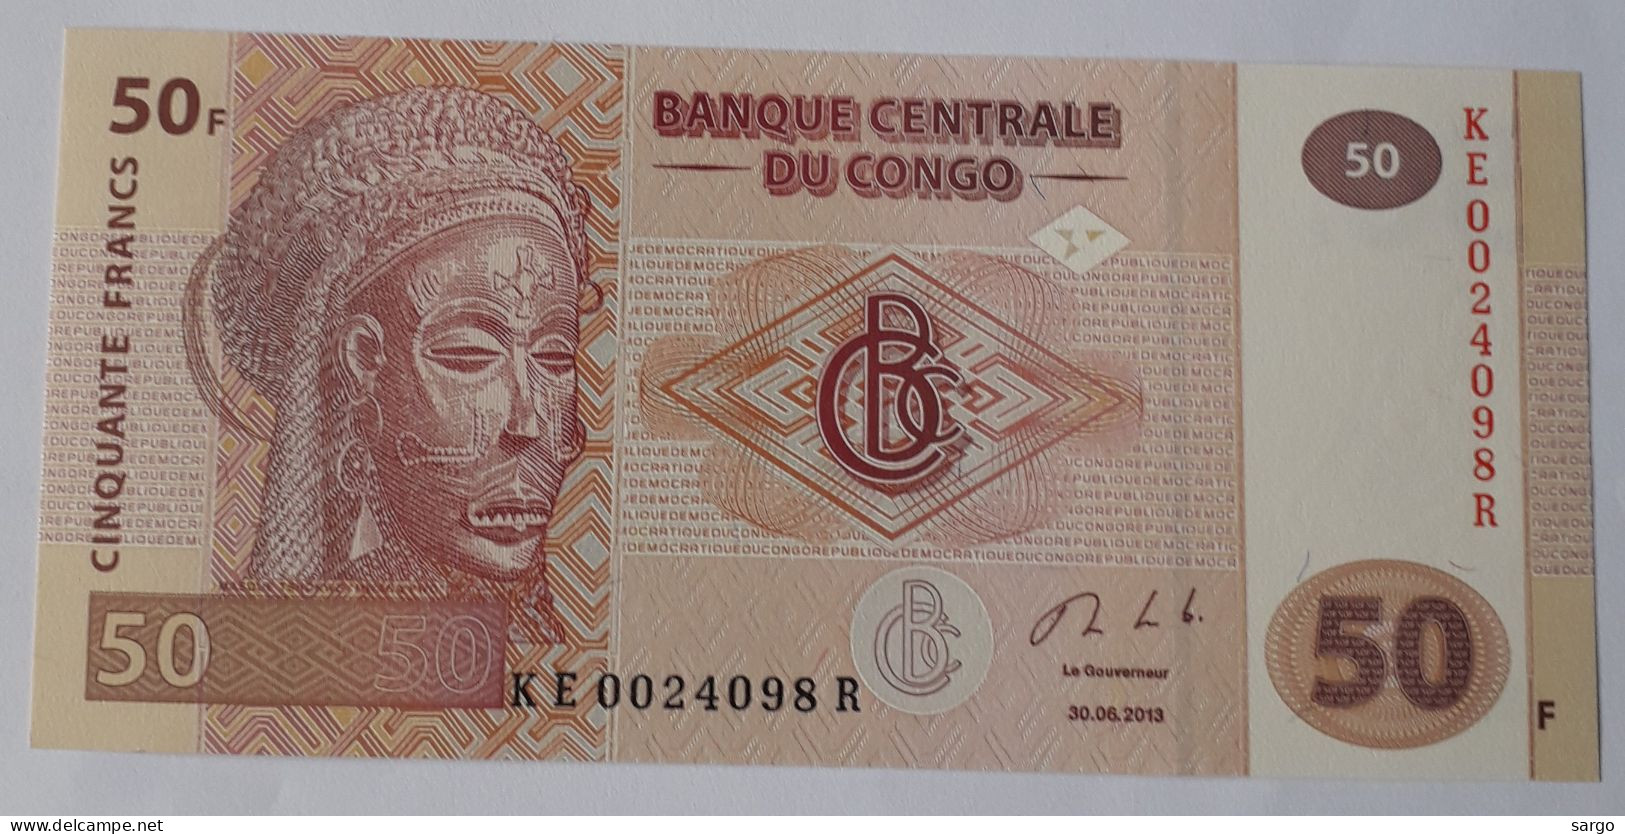 CONGO DEMOCRATIC REPUBLIC - 50 FRANCS  - P 97a  (2013) - UNC - BANKNOTES - PAPER MONEY - CARTAMONETA - - República Democrática Del Congo & Zaire